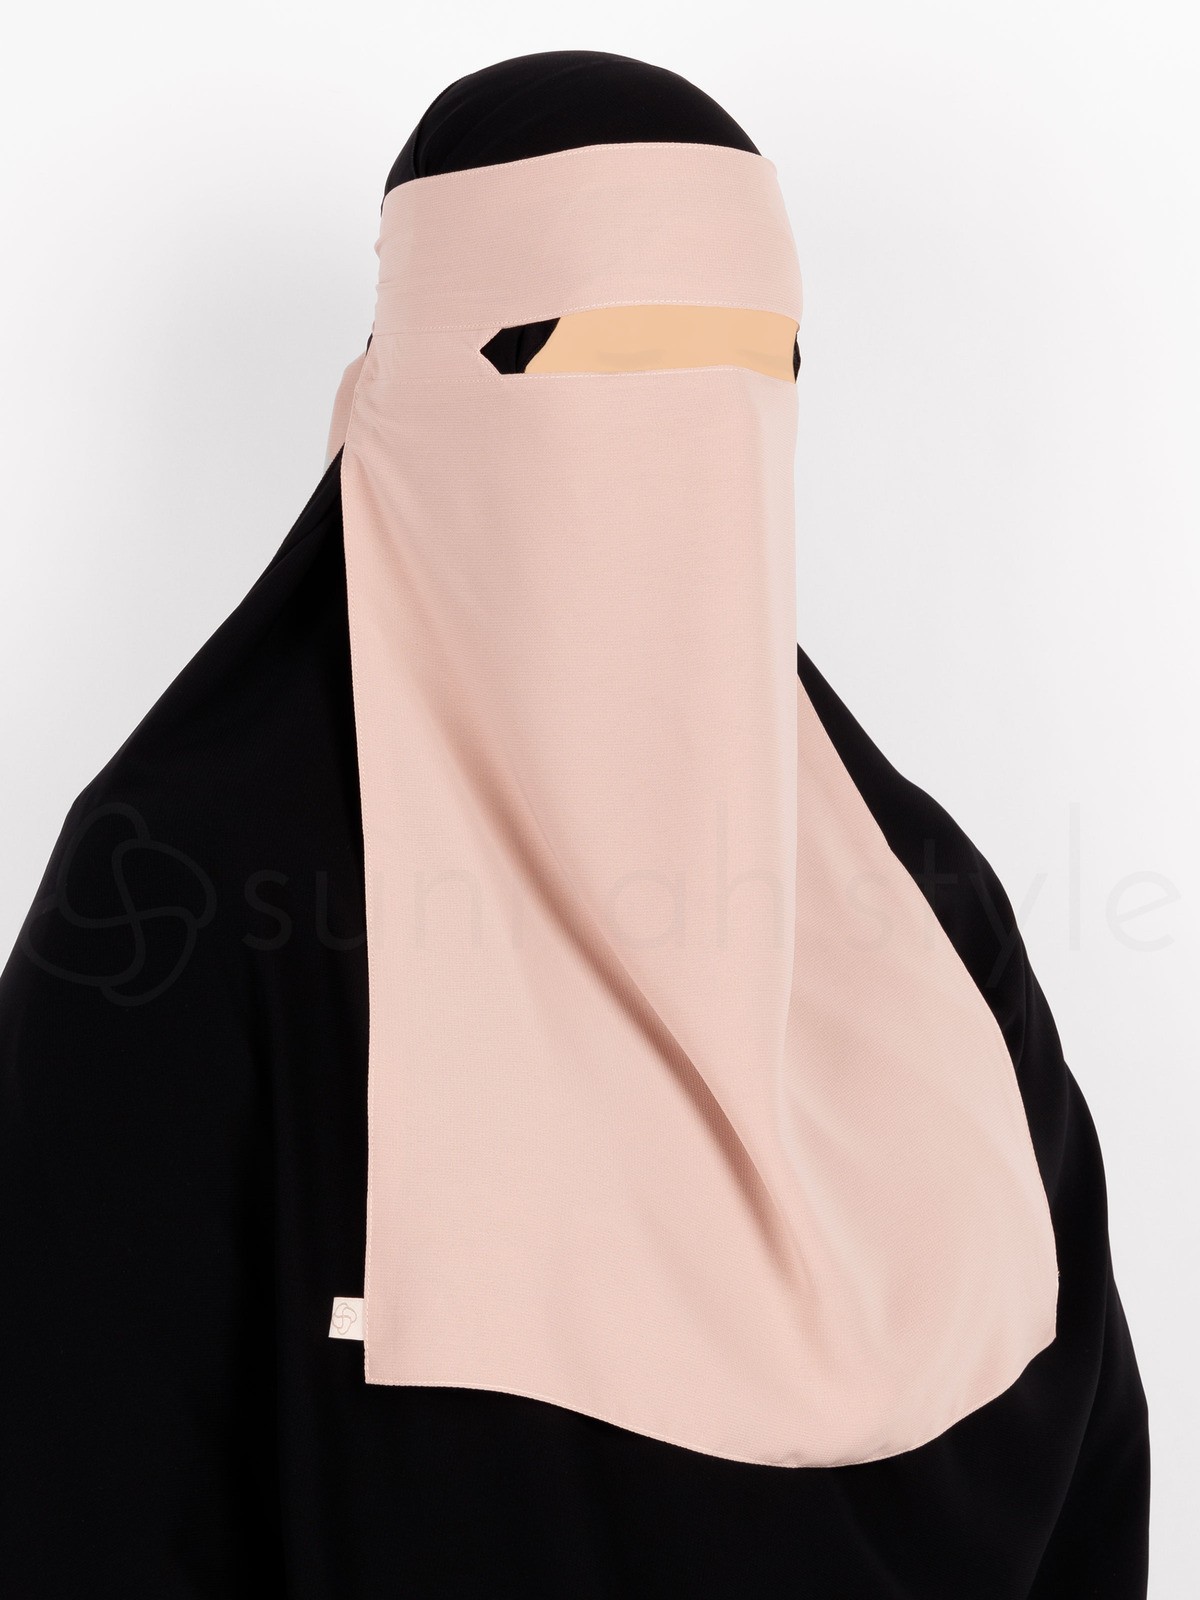 Sunnah Style - No-Pinch One Layer Niqab (Parfait)